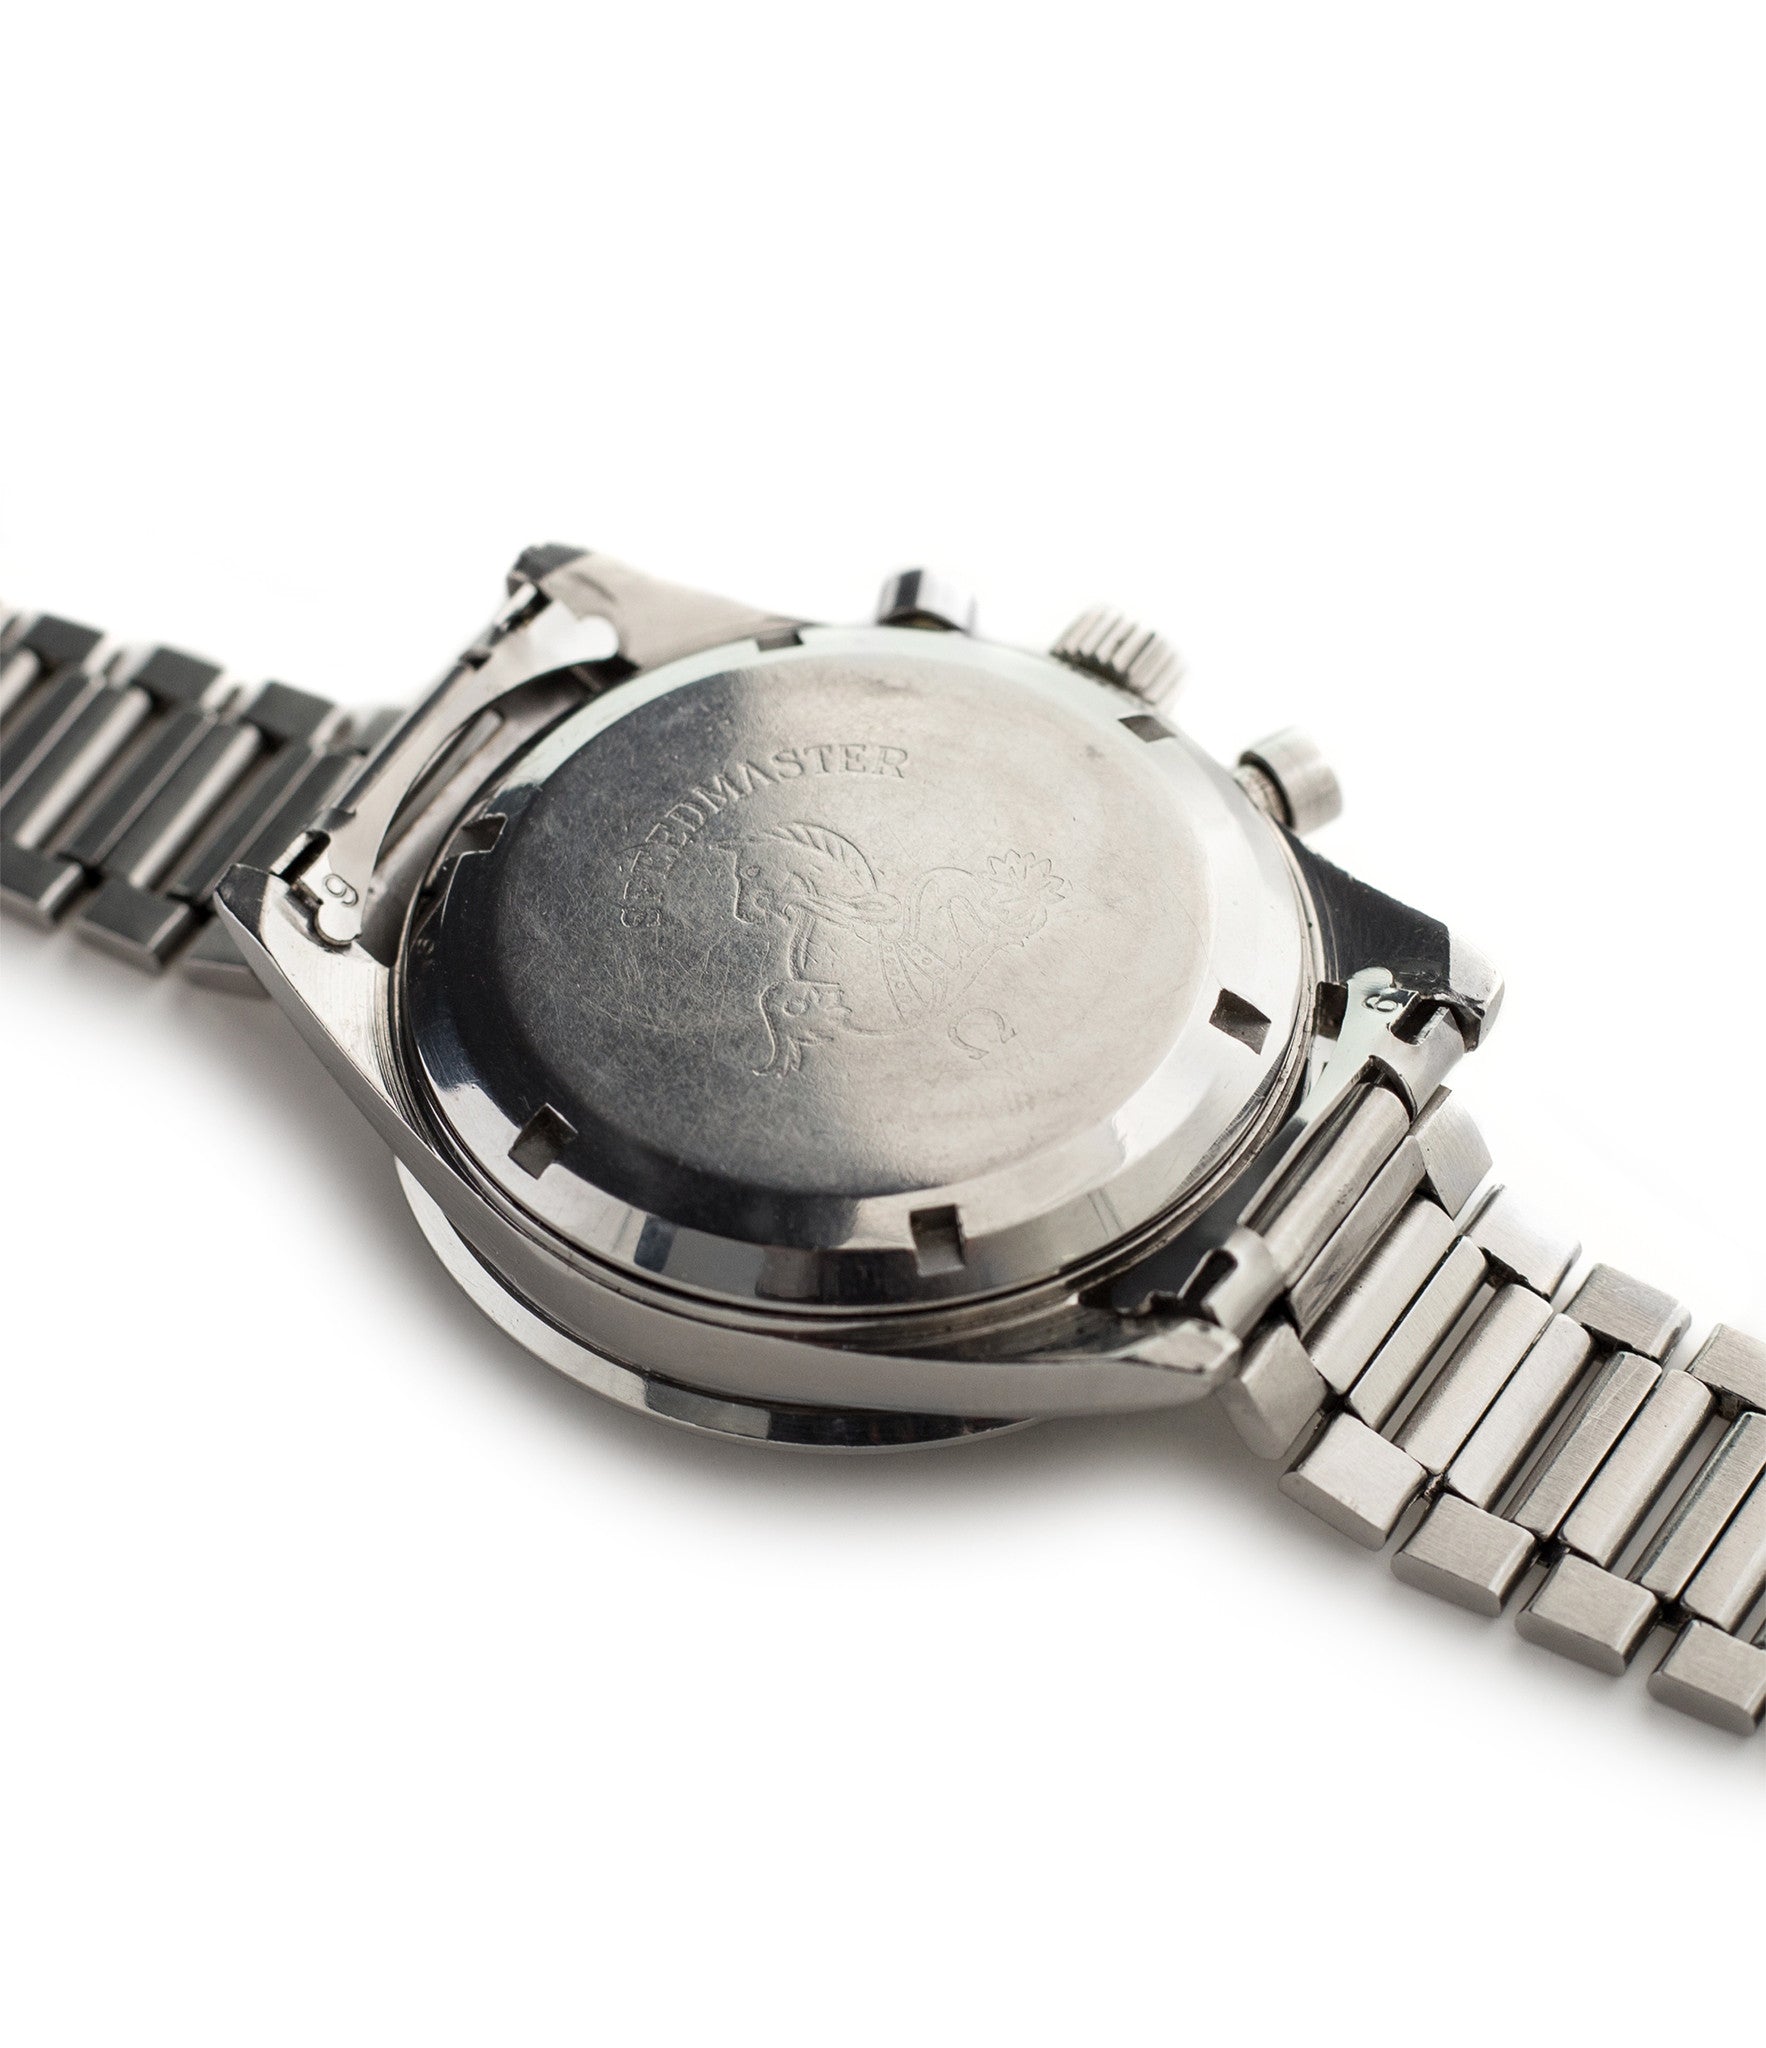 Omega hippocampus on buy vintage Omega Speedmaster Ed White 105.003 steel chronograph watch full set for sale online at WATCH XCHANGE London